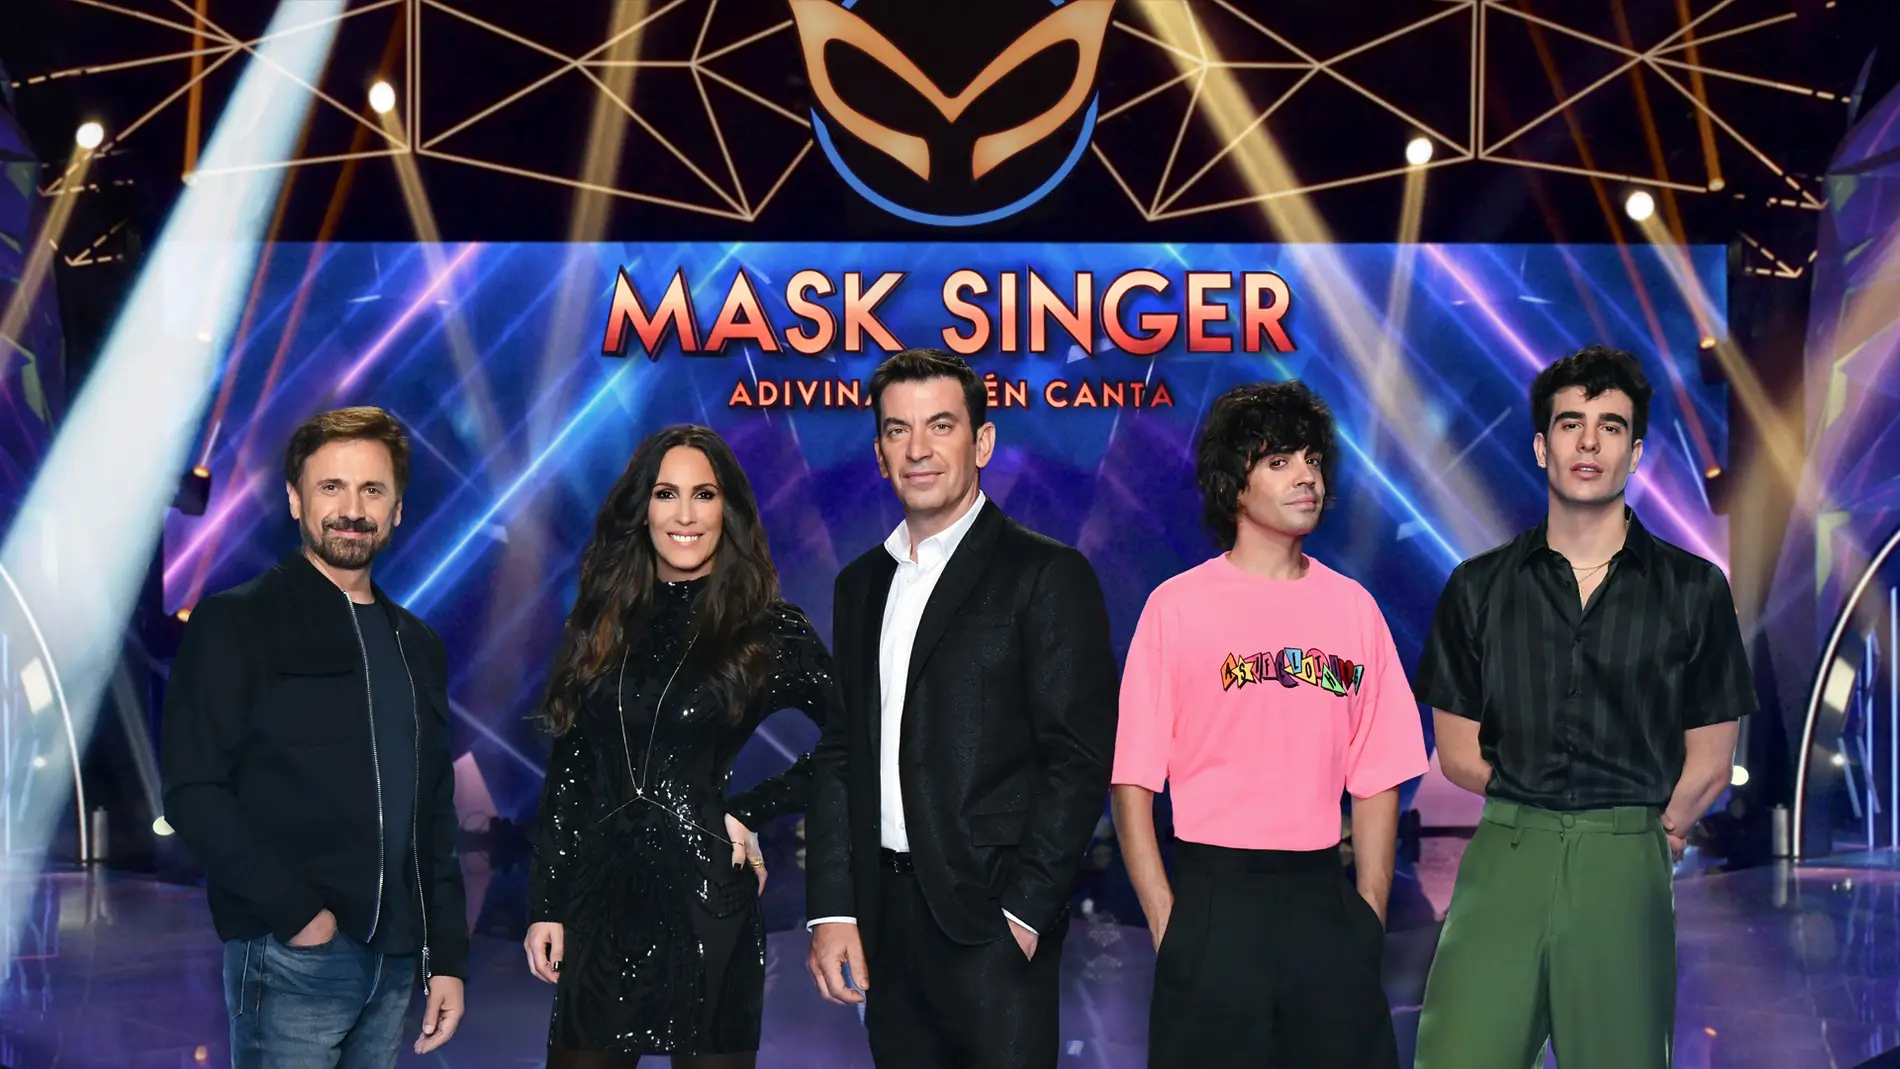 Mask Singer, adivina quién canta title=